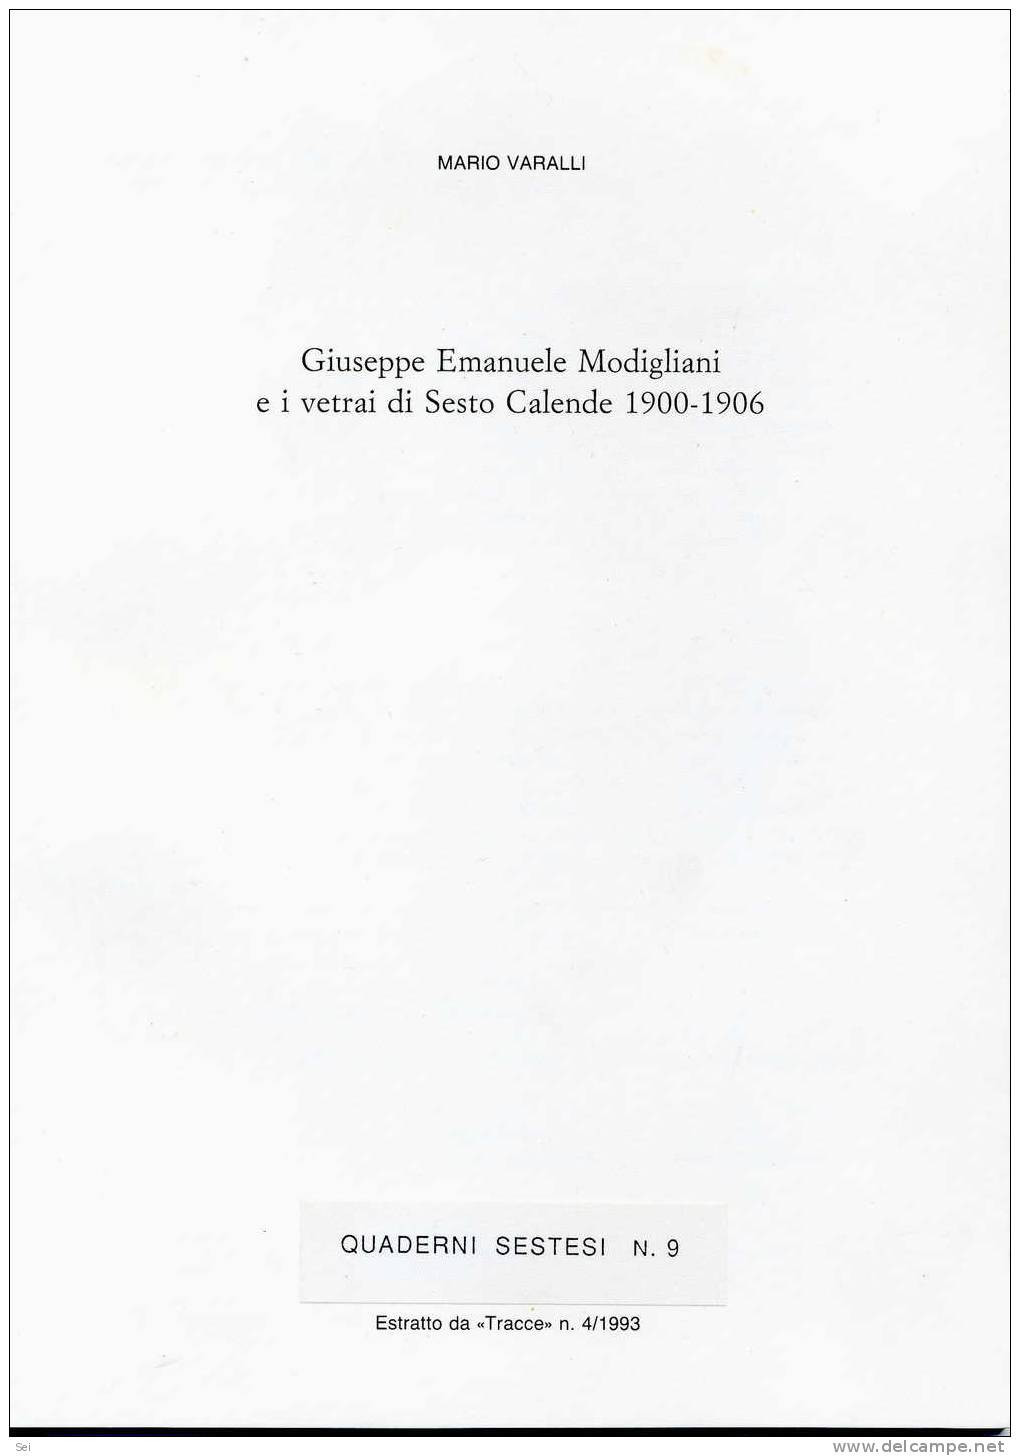 C 607 - Giuseppe Emanuele Modigliani, Vetrai, Sesto Calende, Livorno - History, Biography, Philosophy